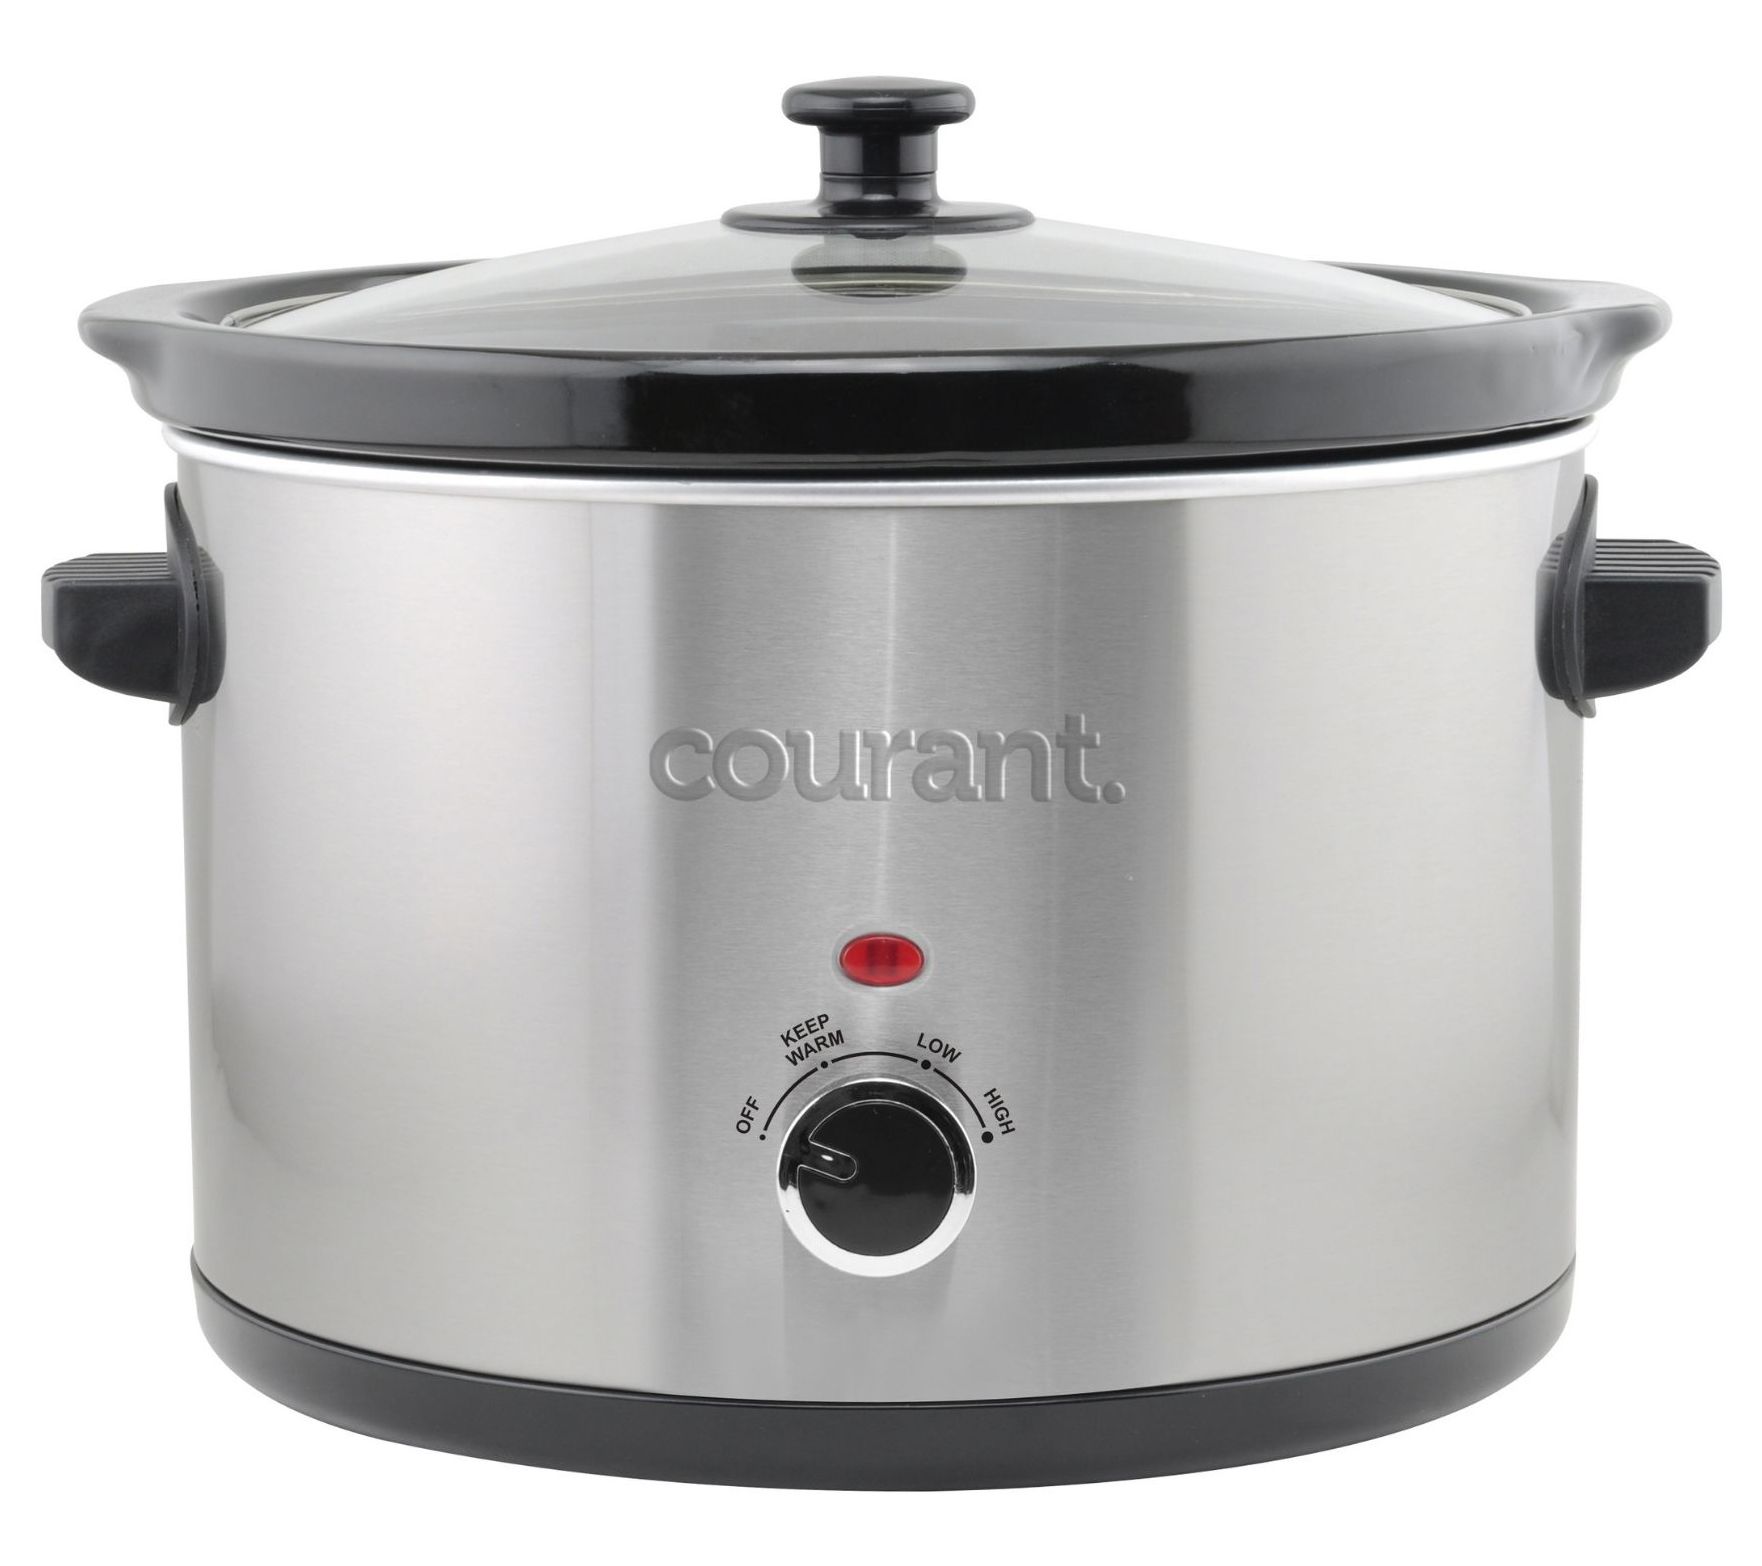 Courant 3.2 Qt. Slow cooker & Reviews